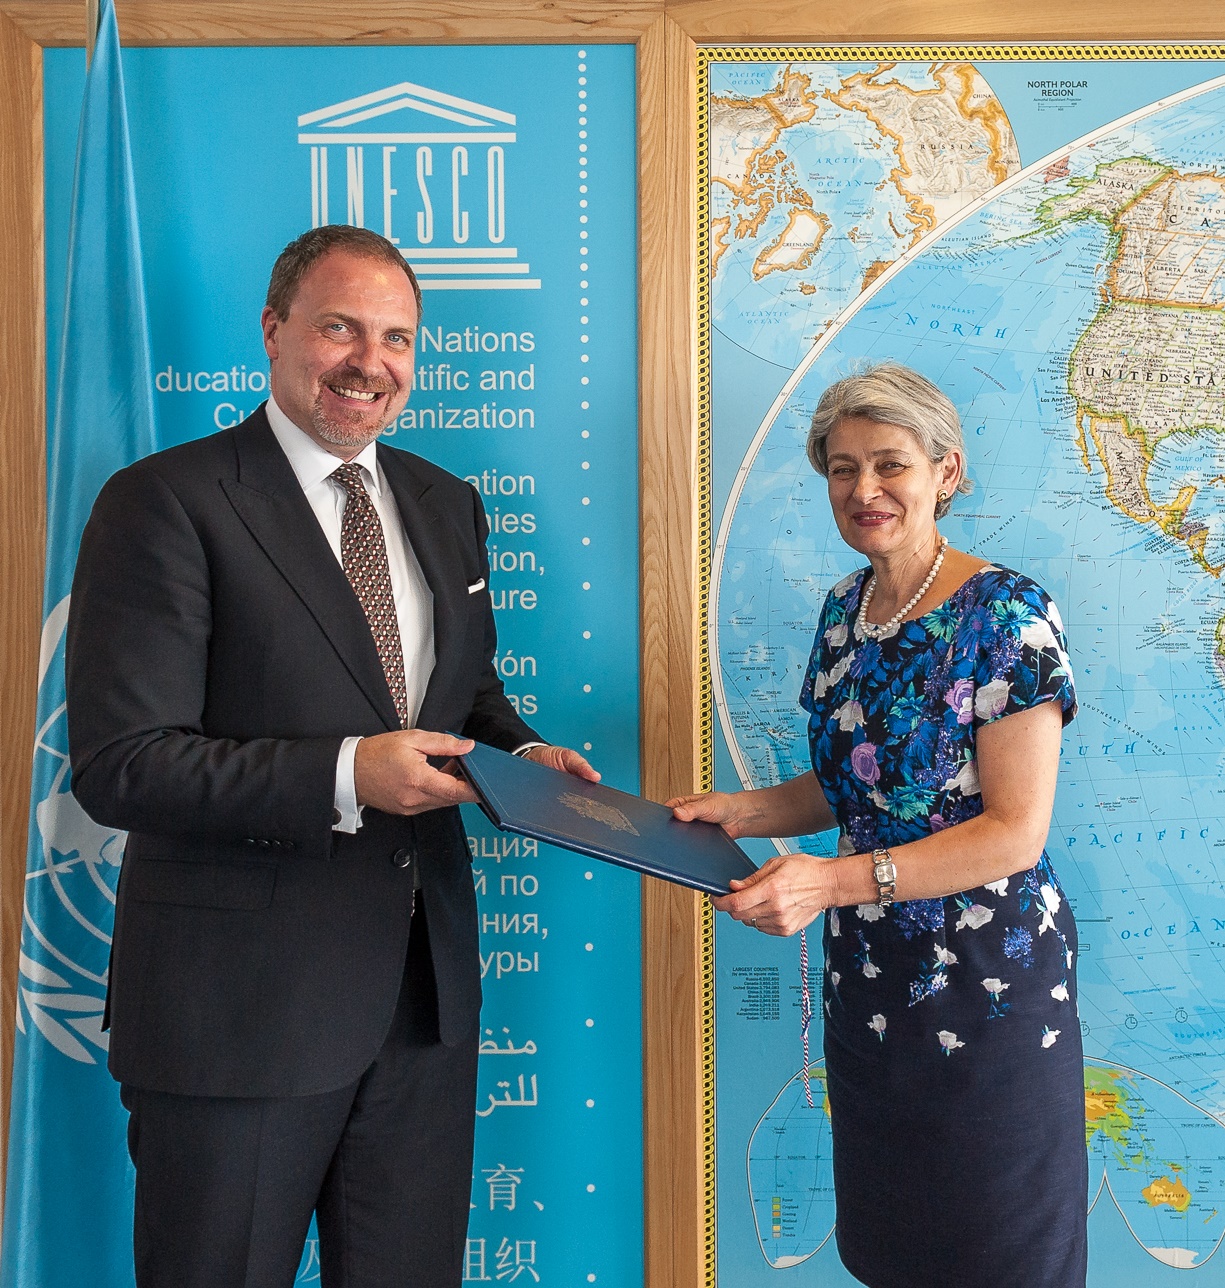 Amb. Kristján Andri Stefánsson presents his credentials to Director-General Irina Bokova as Permanent Representative of Iceland to UNESCO). Credits : © UNESCO/Ignacio Marin